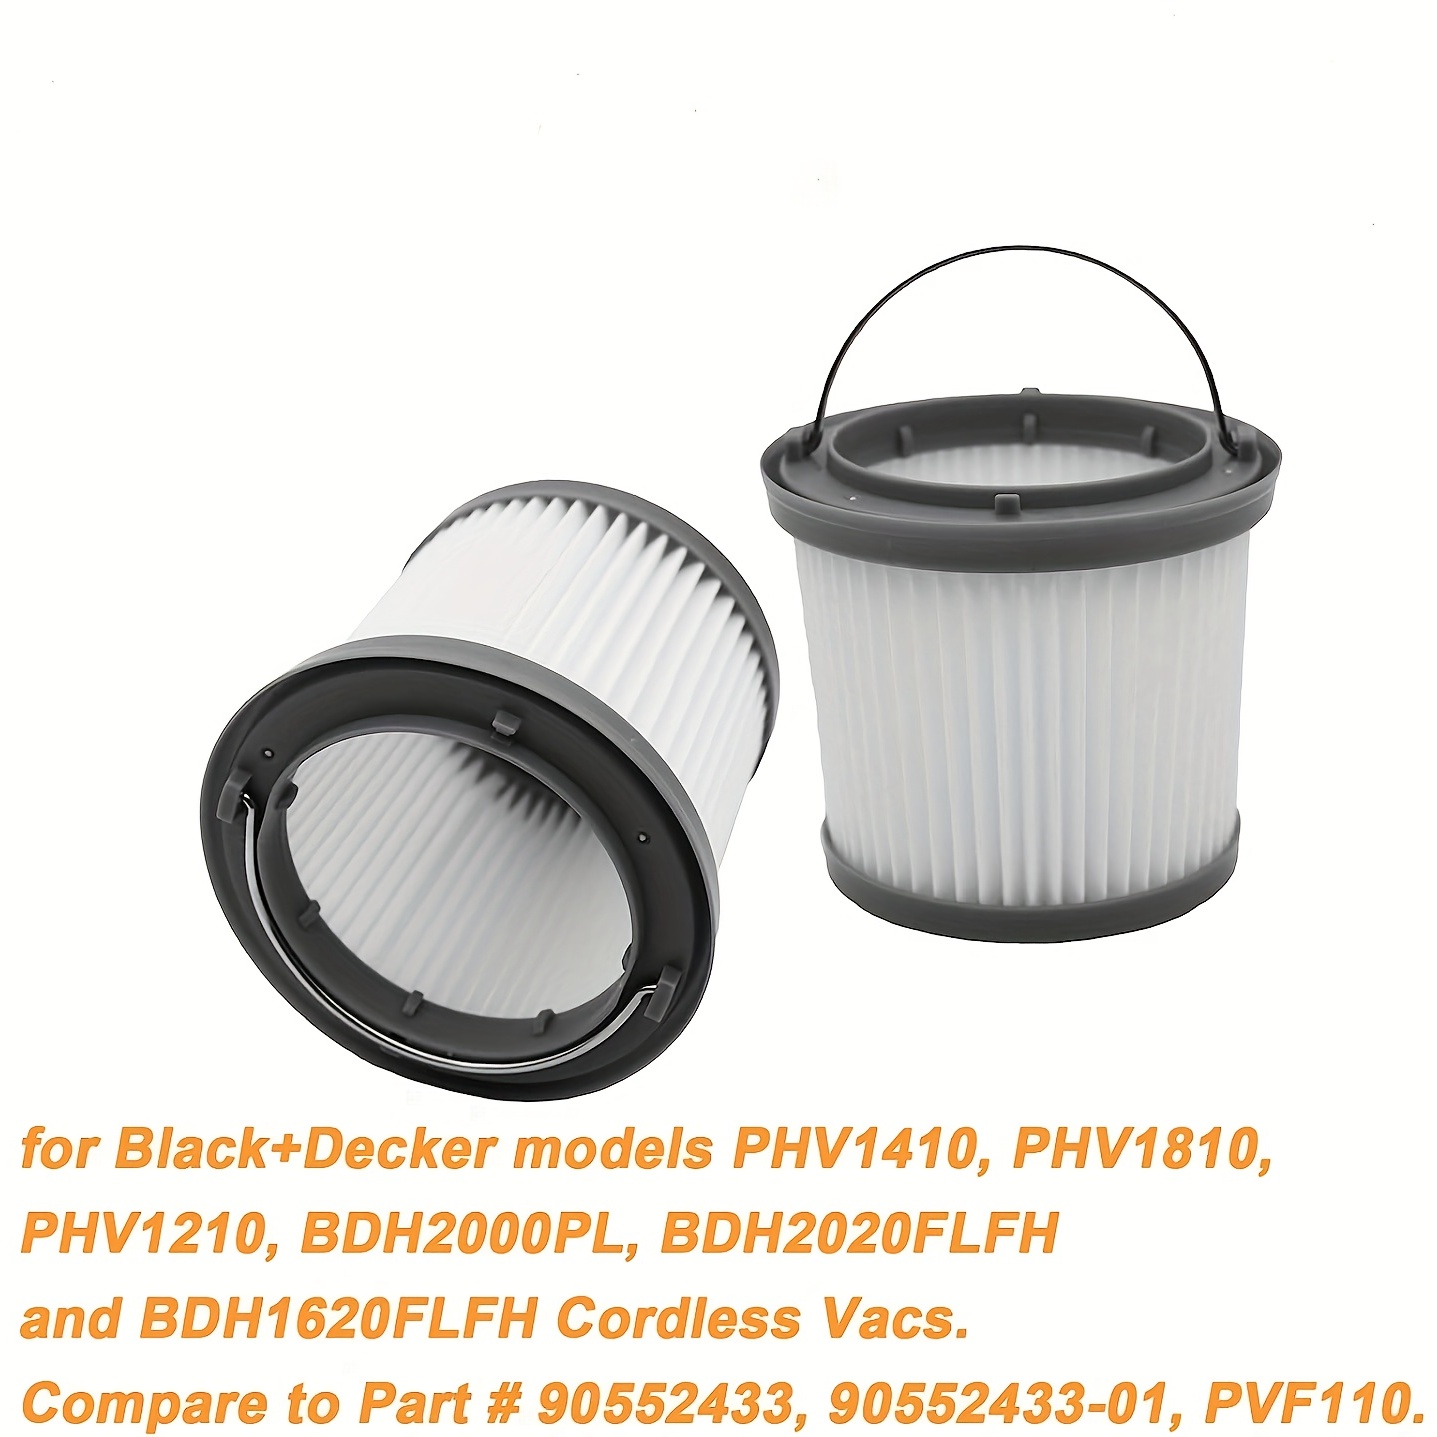 Replacement Black + Decker Vacuum Filter VF110 Dustbuster, Lithium